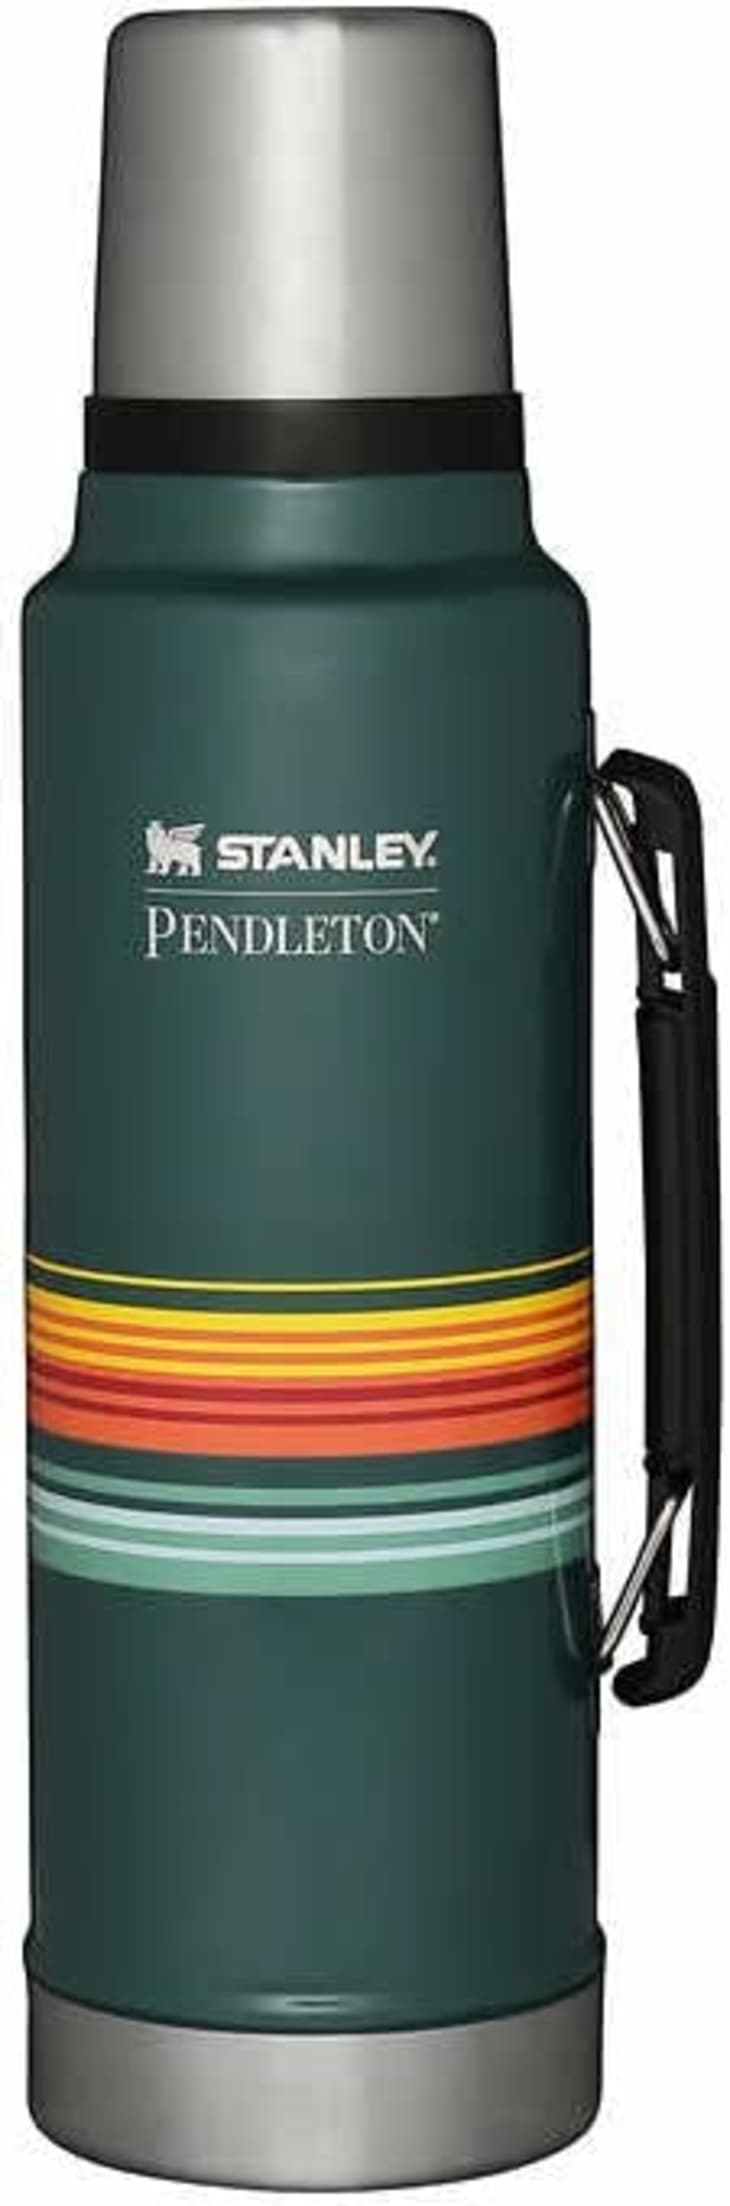 Stanley Pendleton Patterned 1.5-Quart Thermos at Amazon